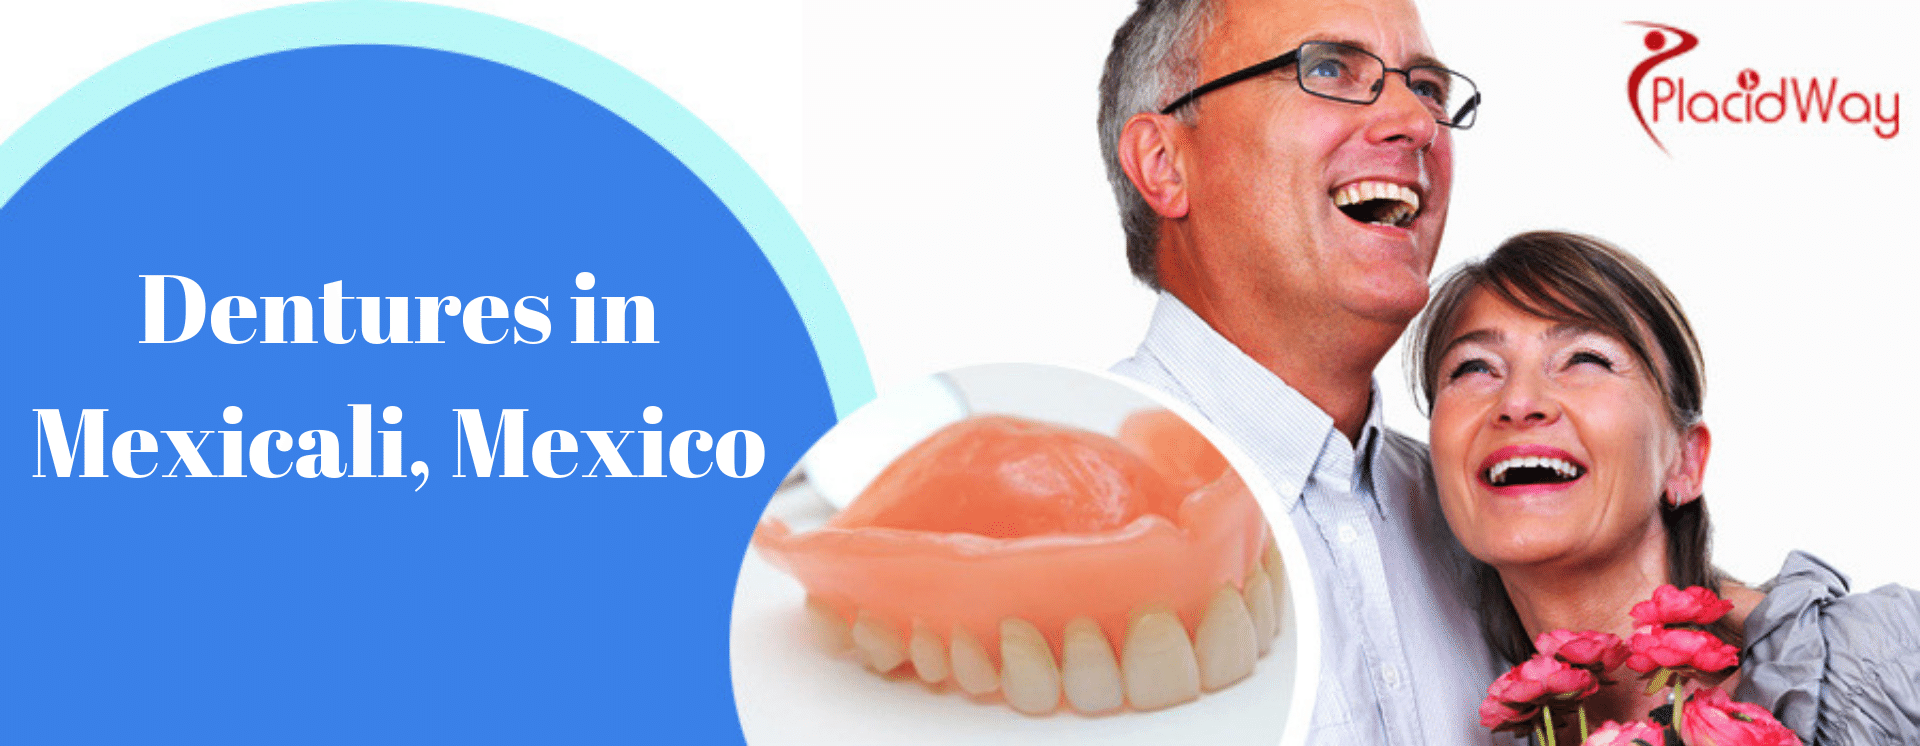 mexicali dentures